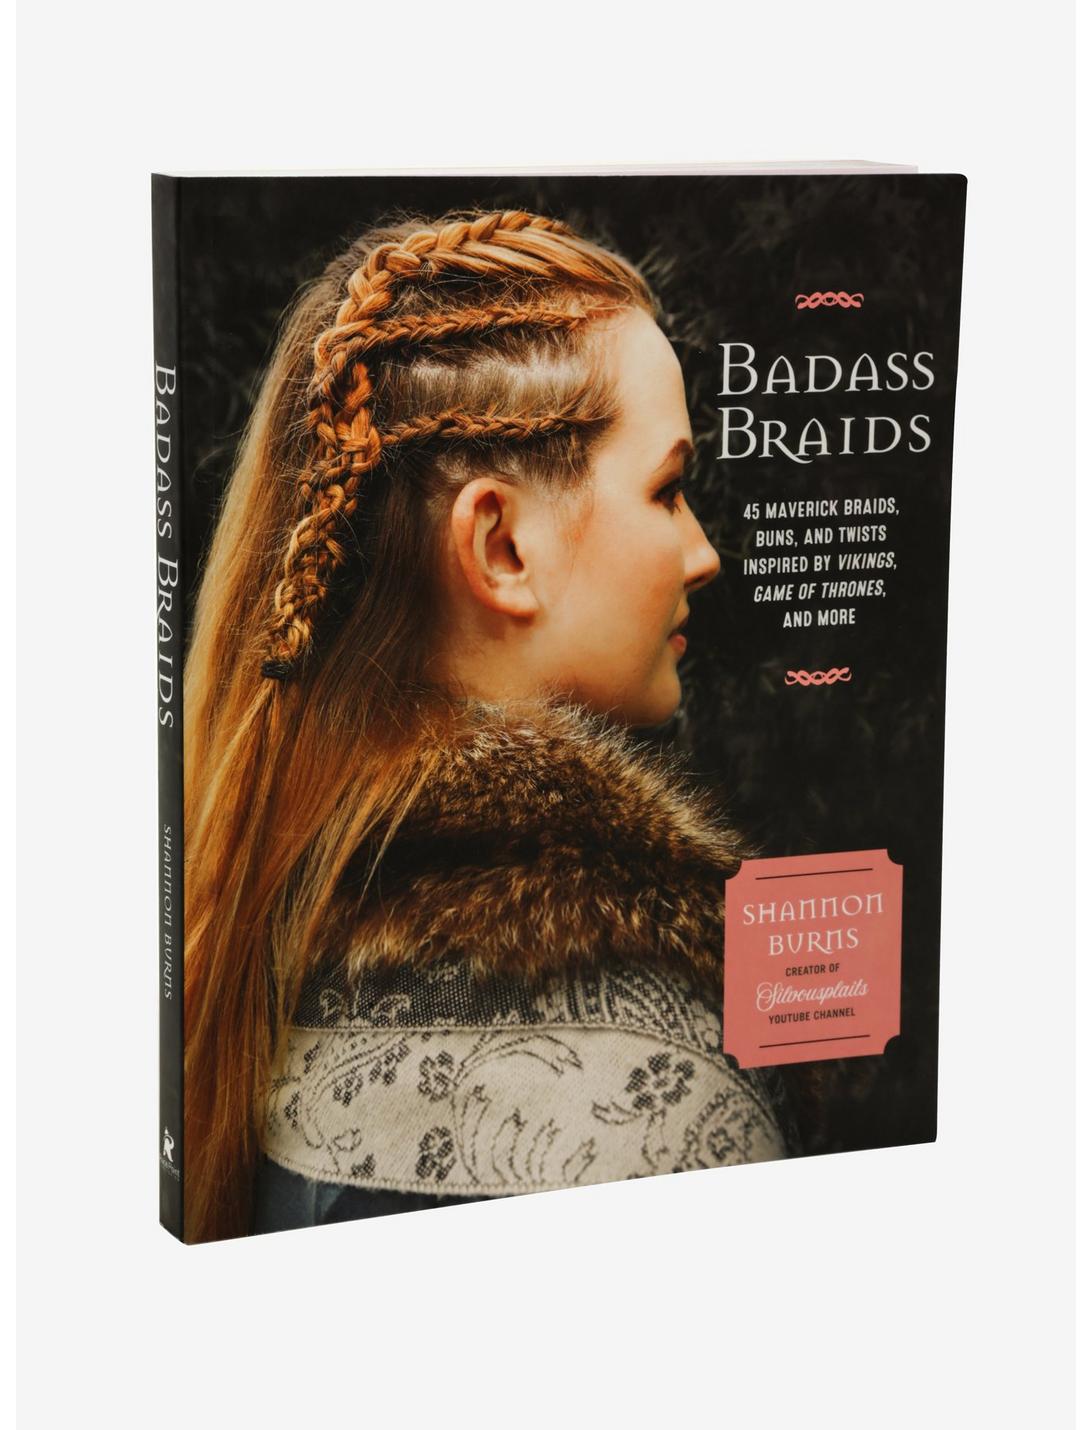 Badass Braids: 45 Maverick Braids, Buns, And Twists Inspired by Vikings, , hi-res